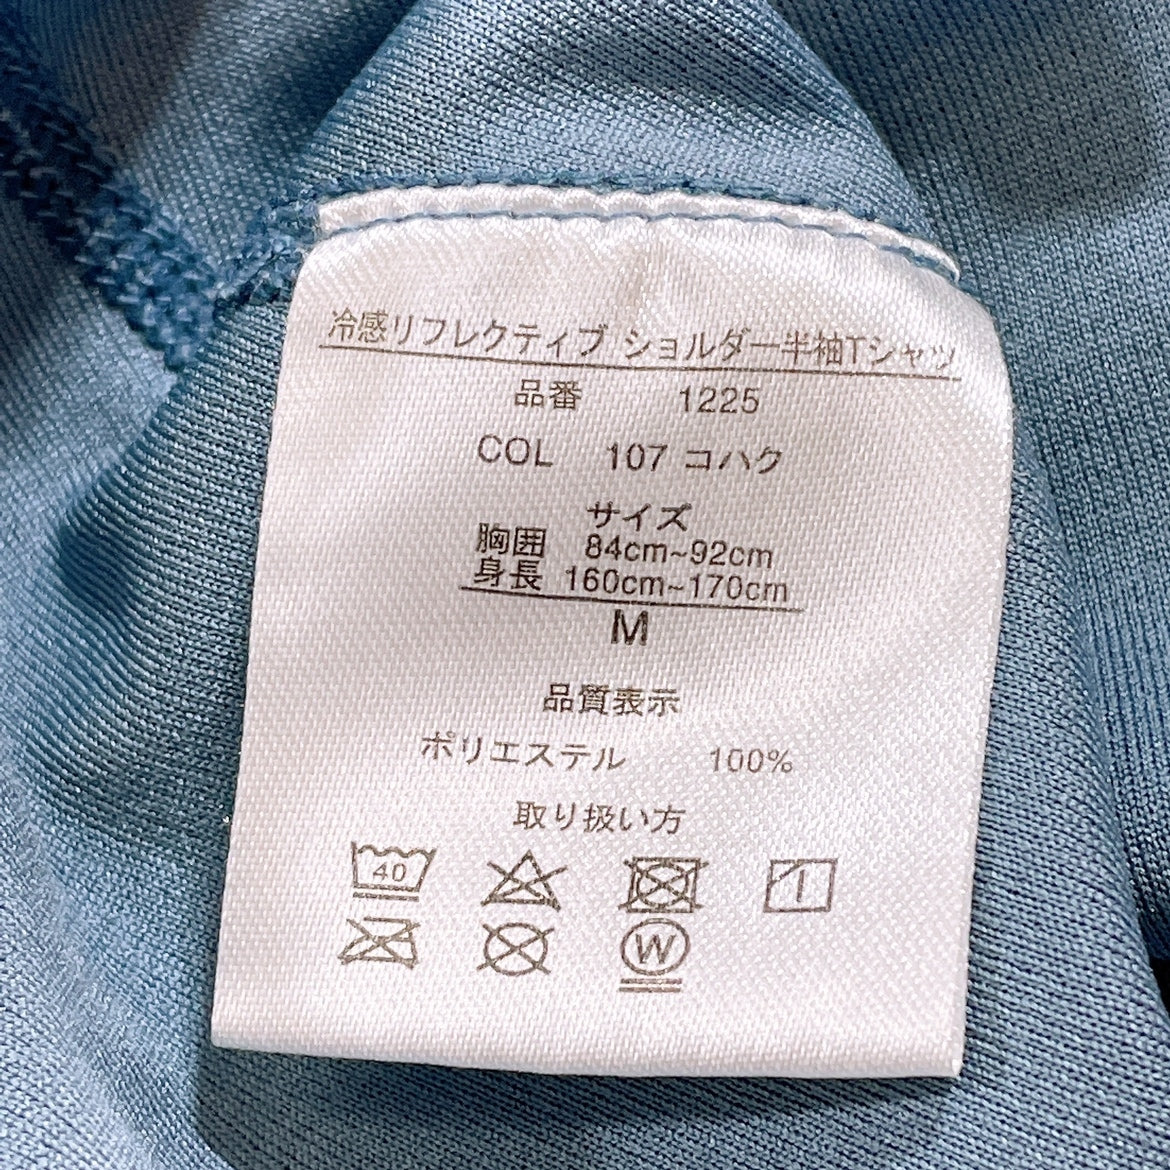 【22406】 FIND-OUT ファインド・アウト 半袖Tシャツ 運動服 運動着 スポーツウェア 青 ブルー M シンプル 夏 春